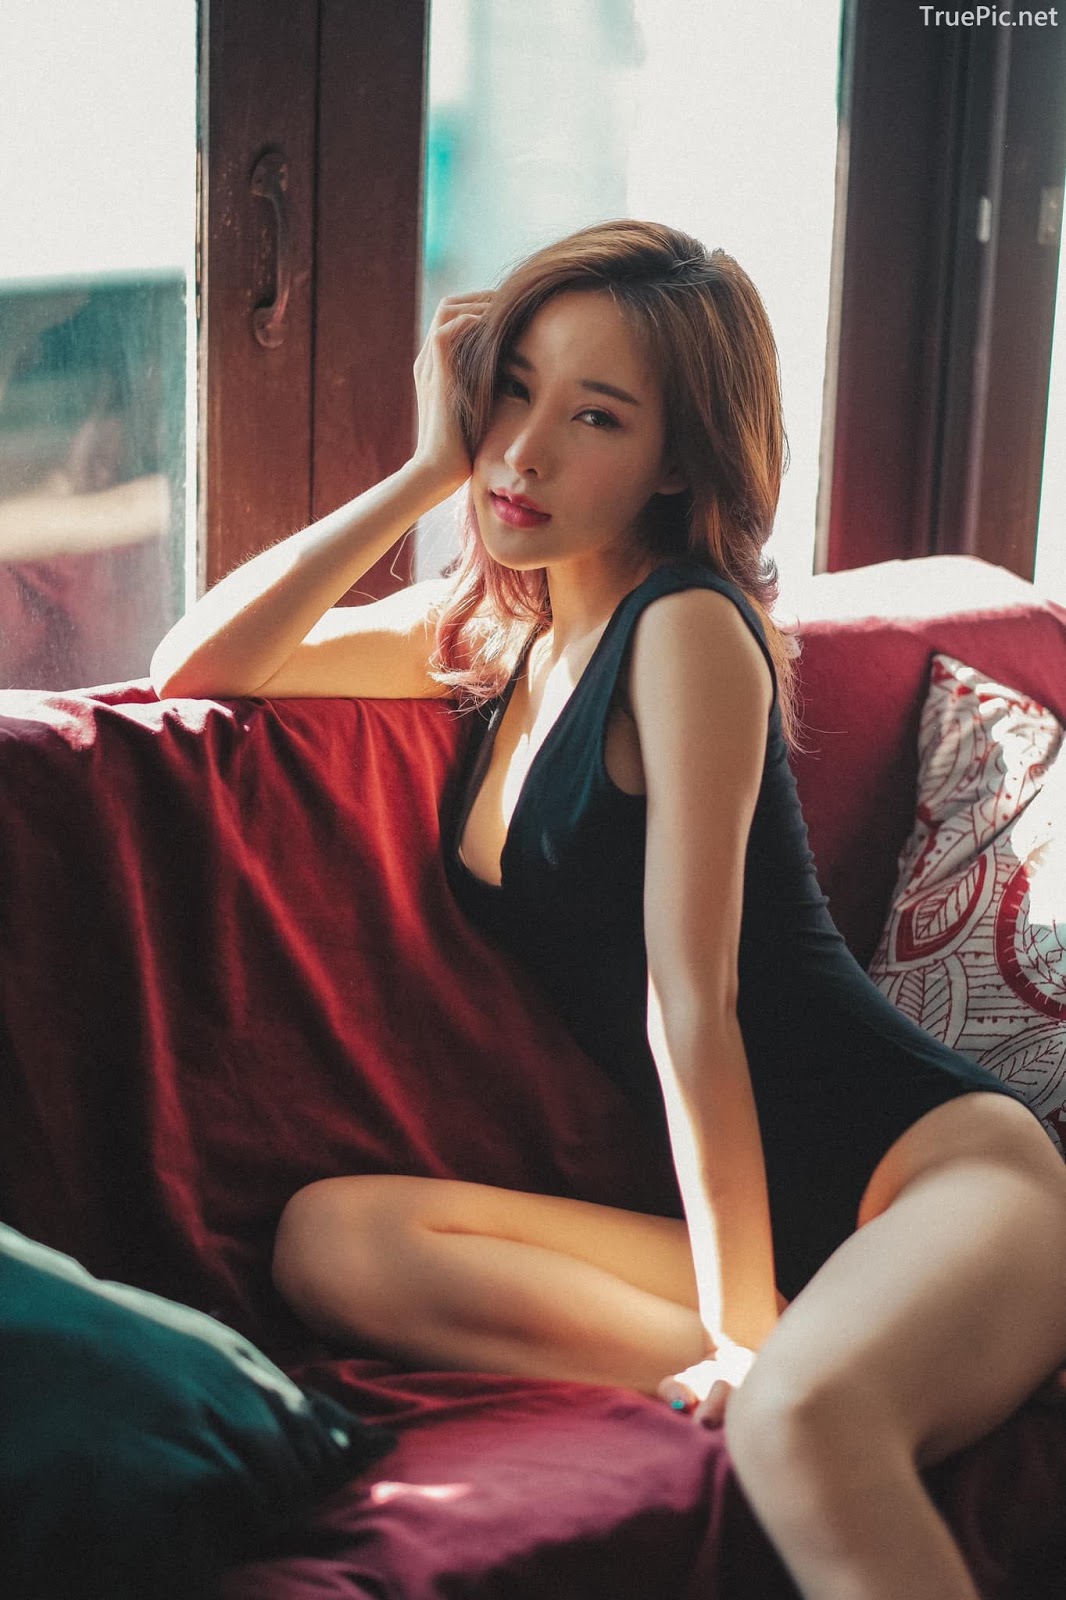 Thailand model - Arys Nam-in (Arysiacara) - Black Rose feeling the sun - Picture 24